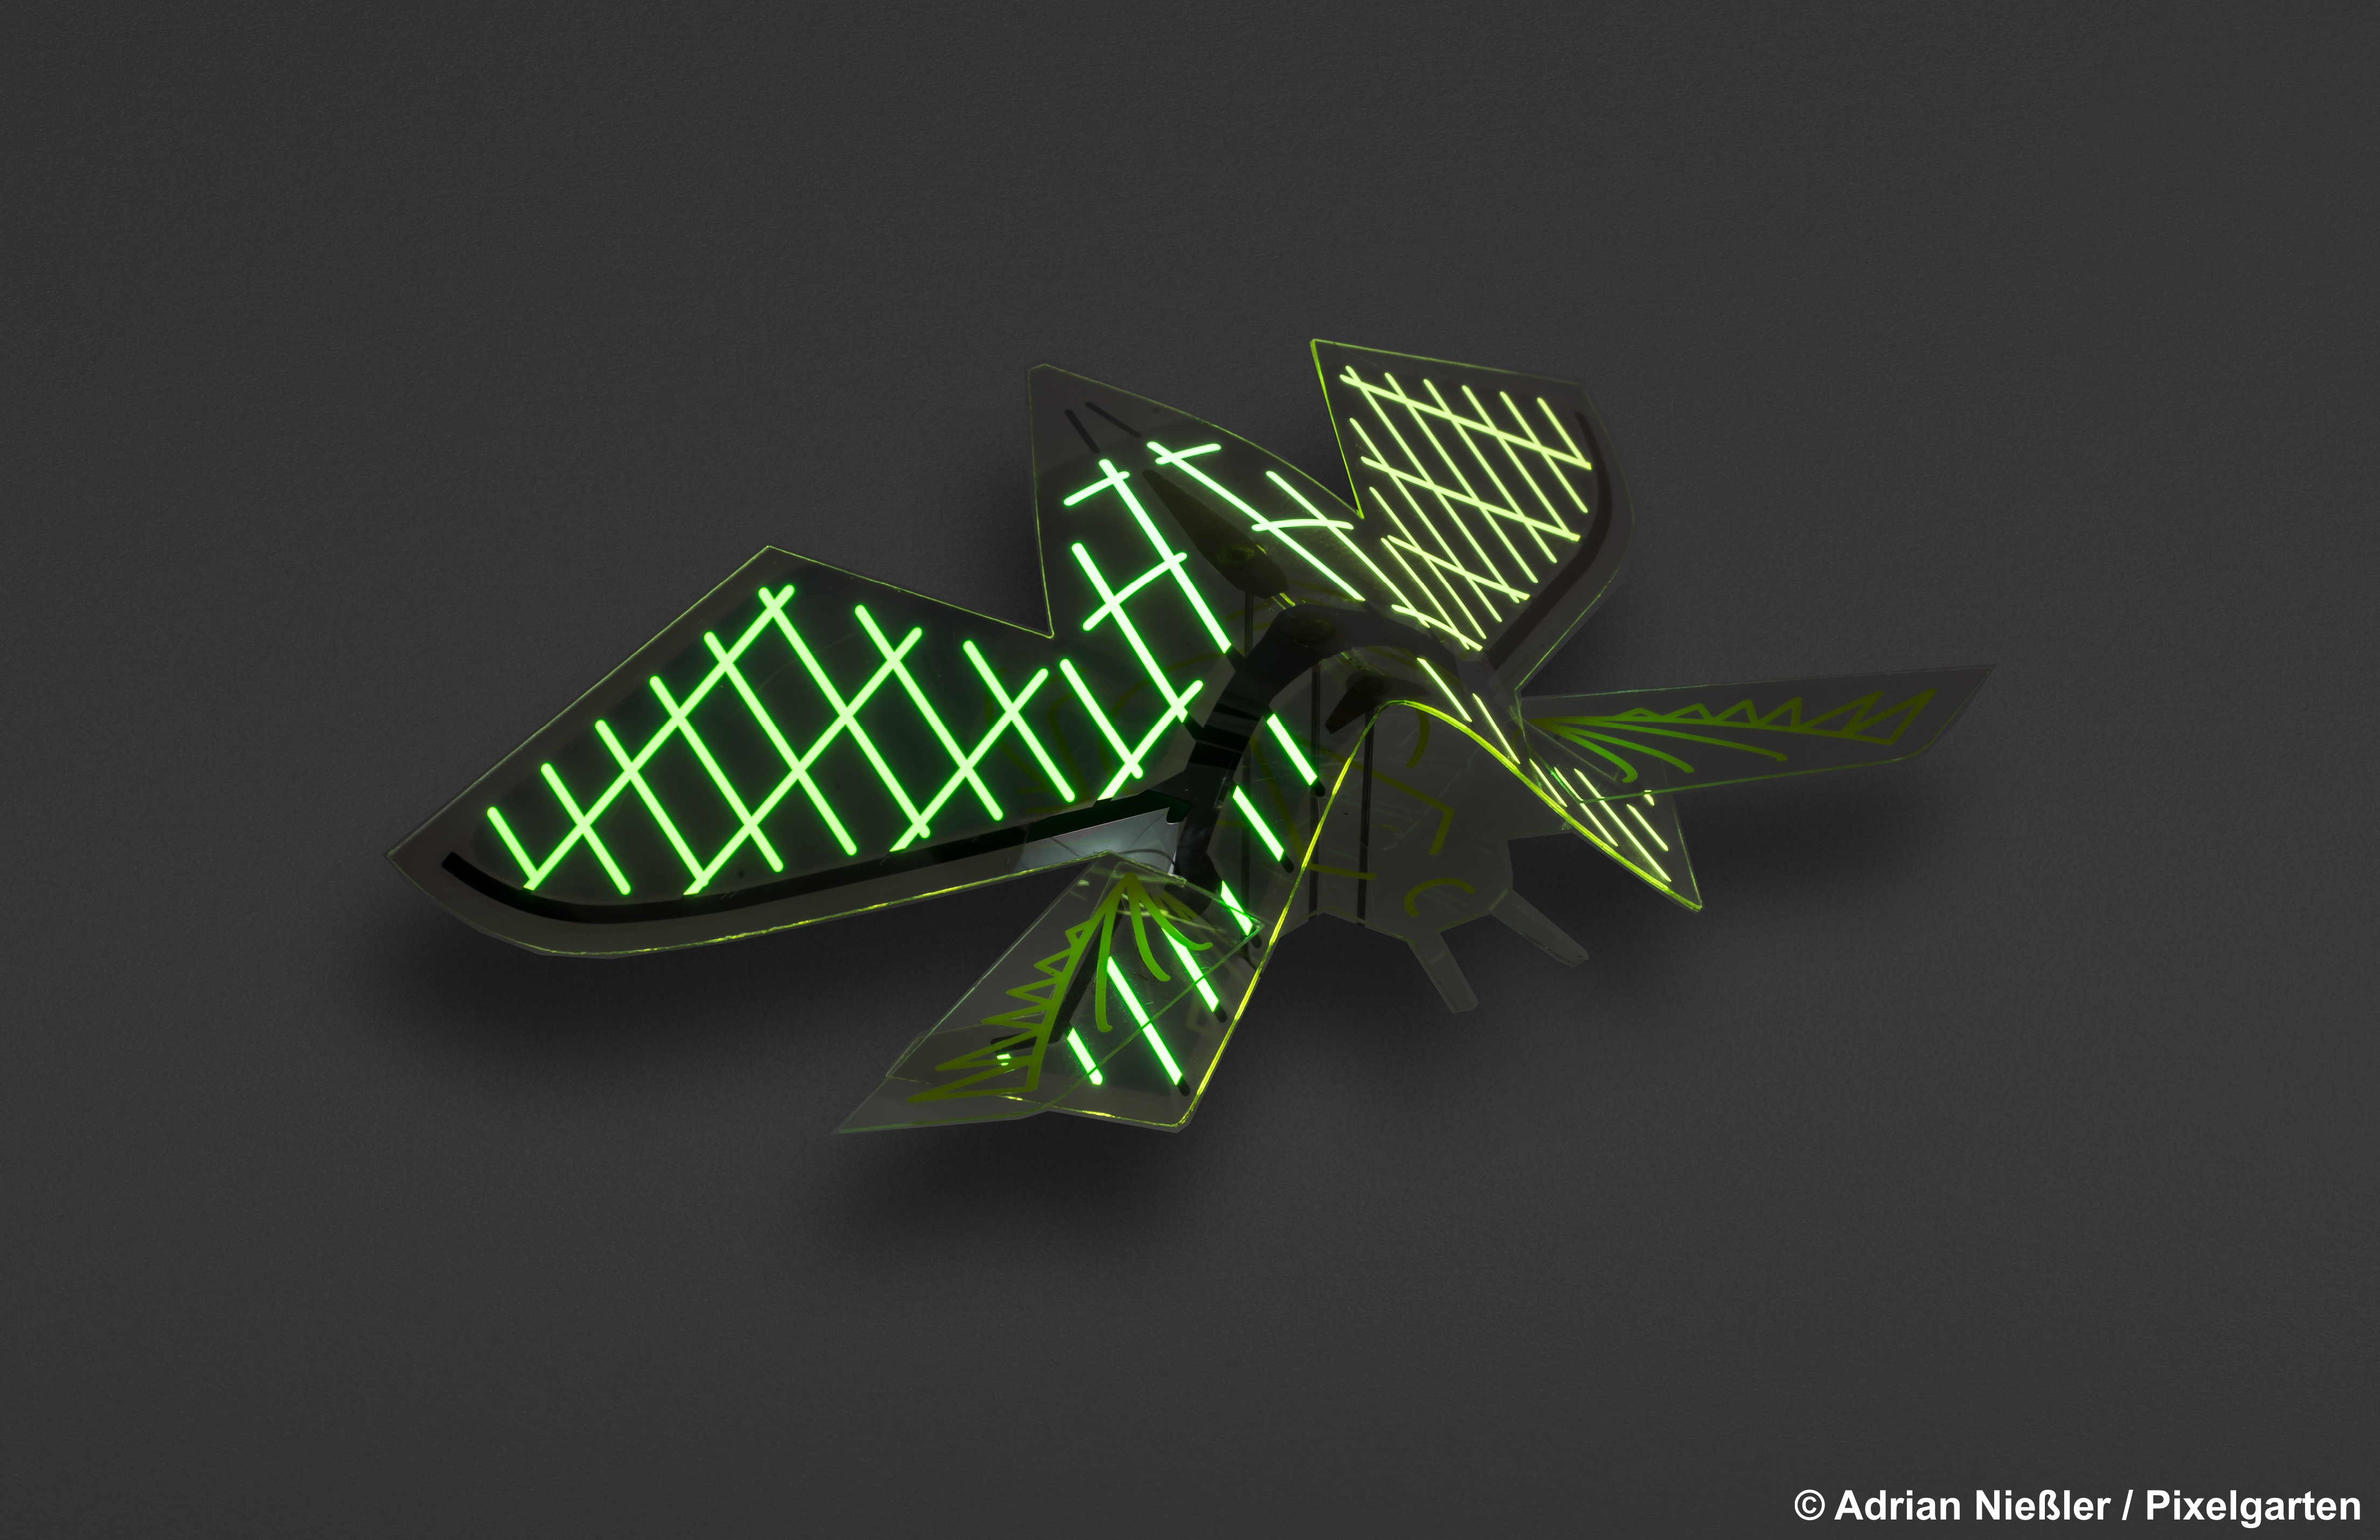 Musca Noctis – Nachtfliege des „Insect-Project“ mit OLED auf flexibler Kunststofffolie